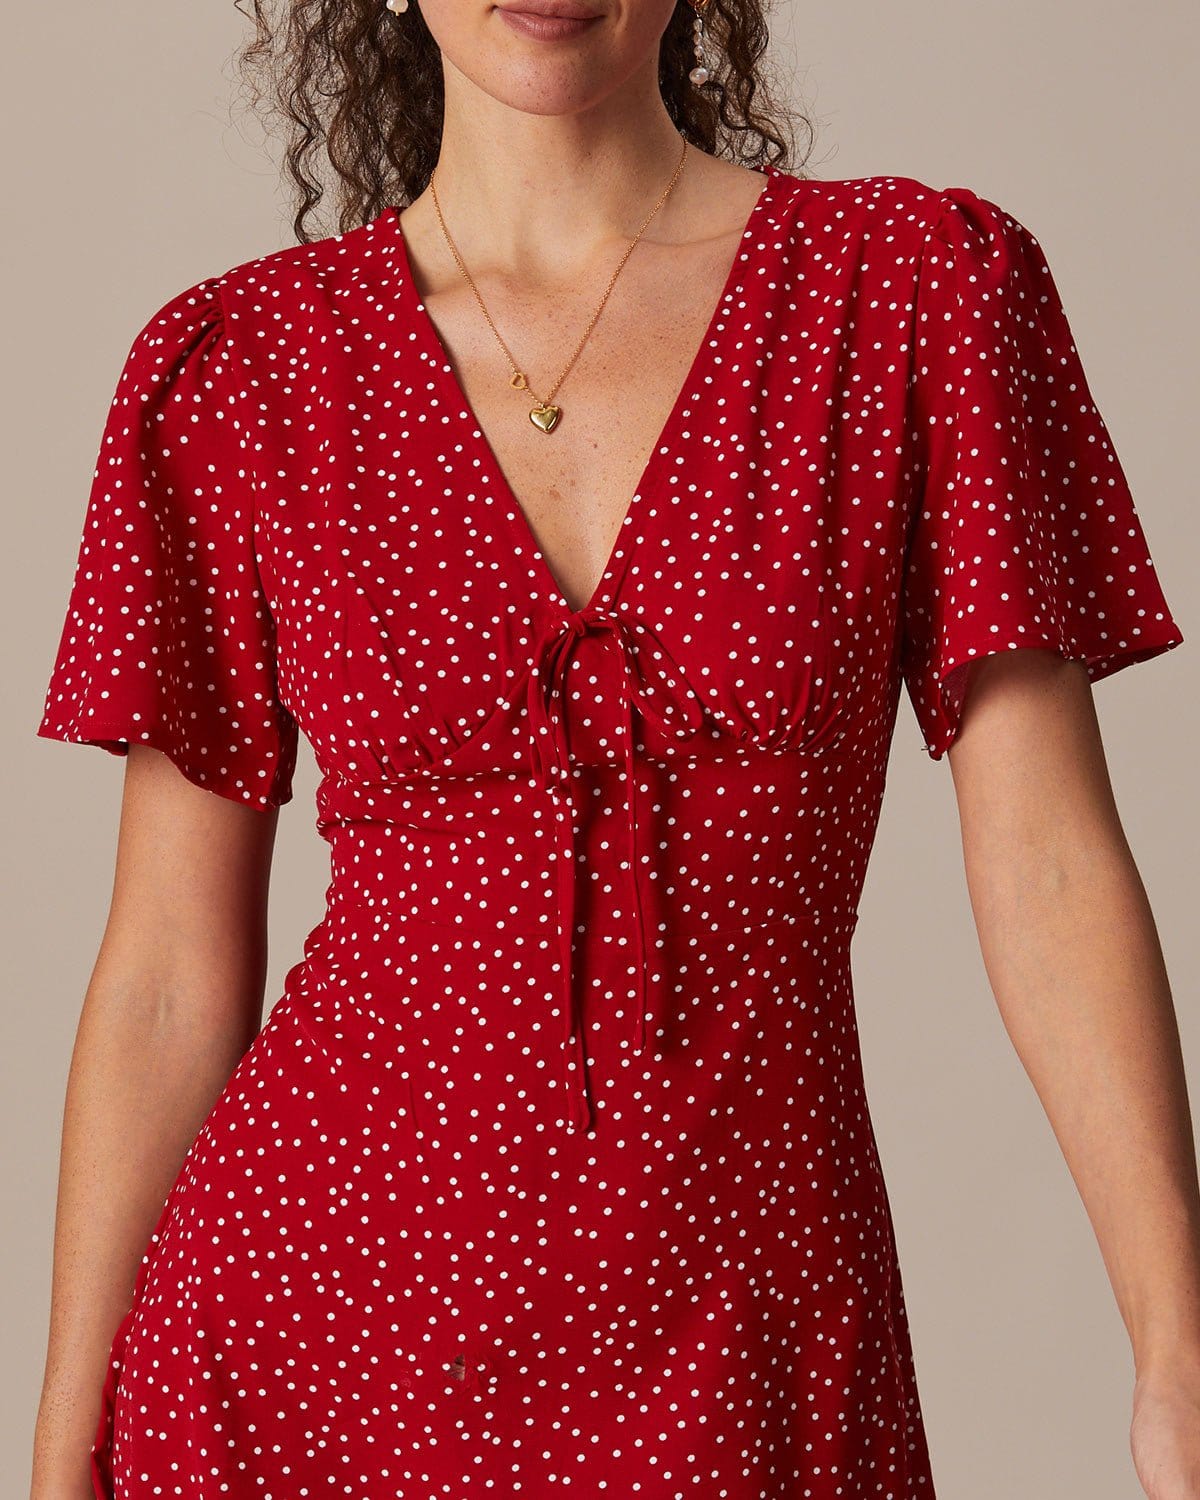 The Red V-Neck Polka Dot Mini Dress Dresses - RIHOAS